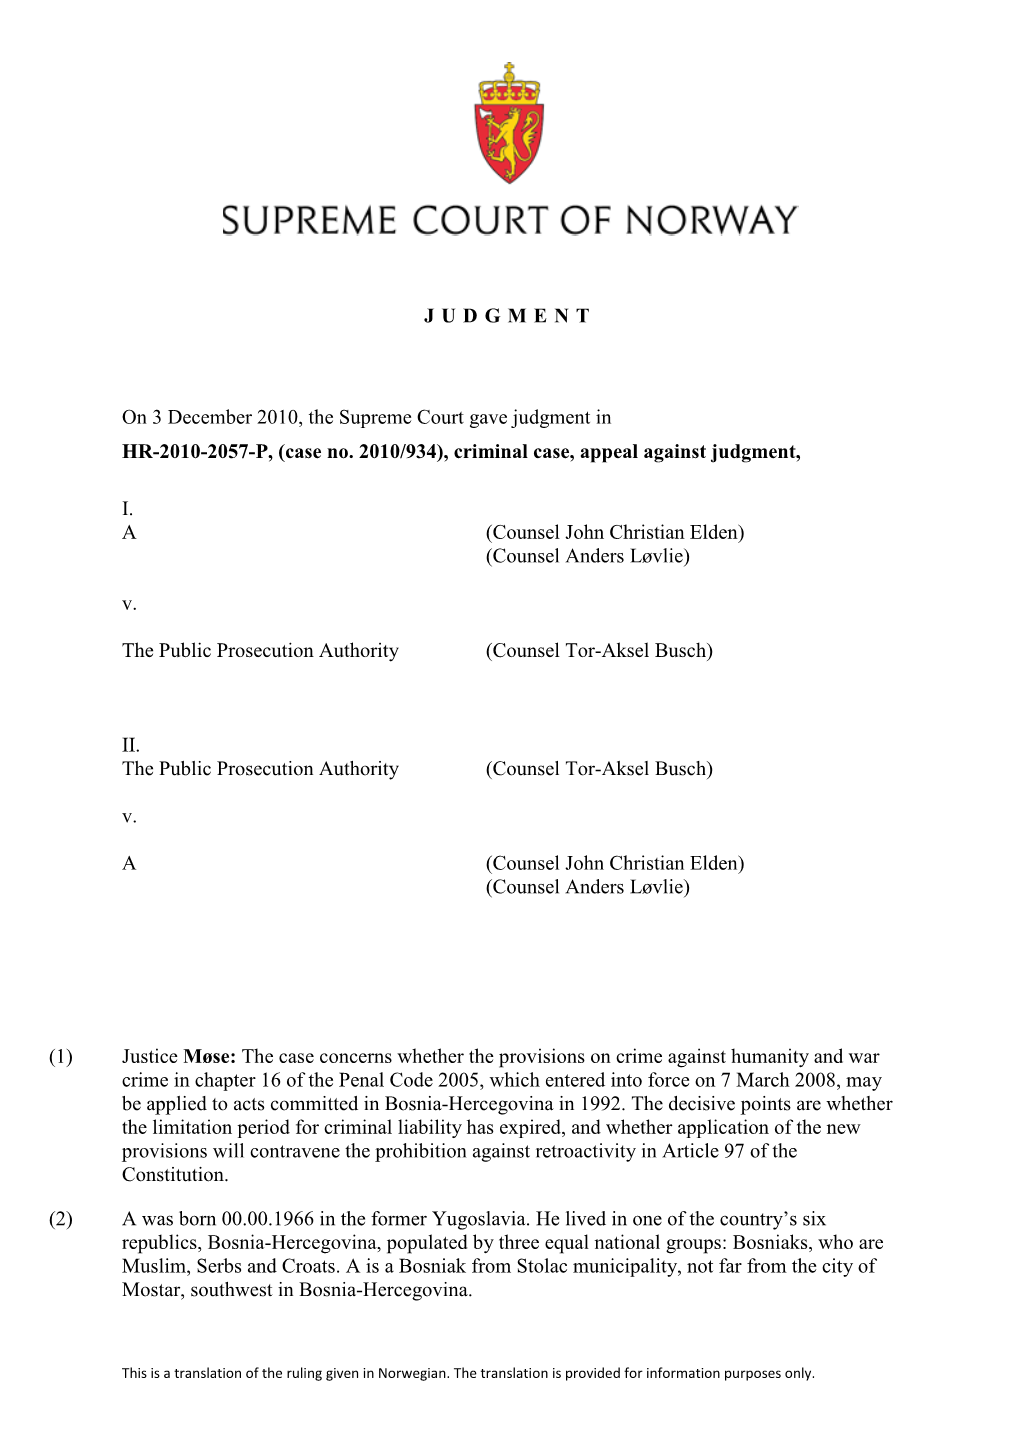 (Case No. 2010/934), Criminal Case, Appeal Against Judgment